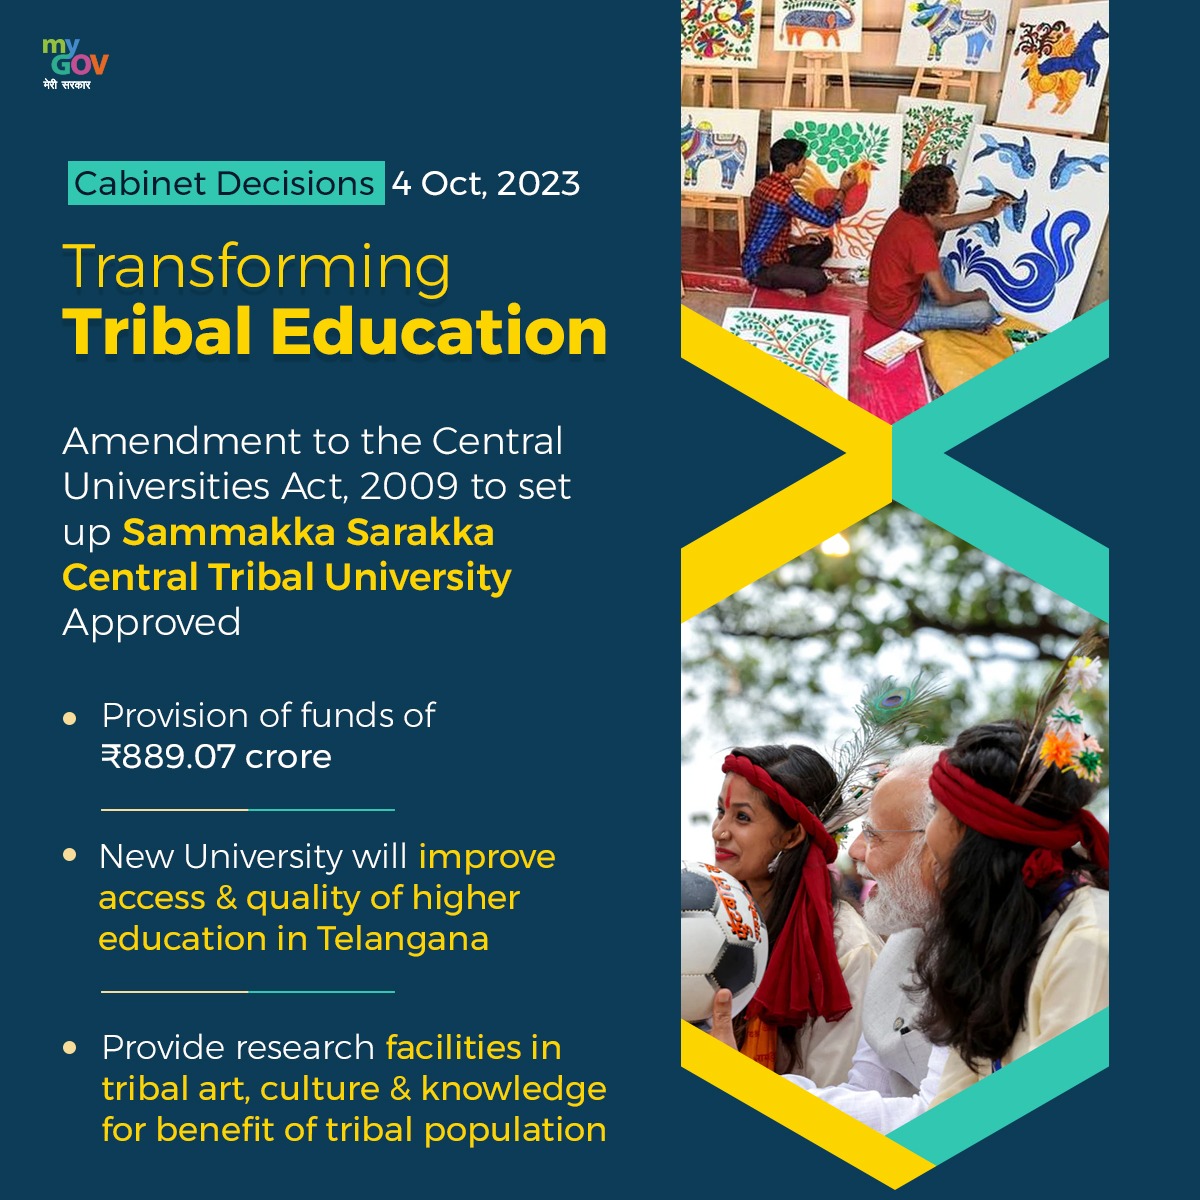 Big strides in tribal education!

Sammakka Sarakka Central Tribal University in Telangana gets the green light.

#CabinetDecisions #TribalEmpowerment
#SammakkaSarakka